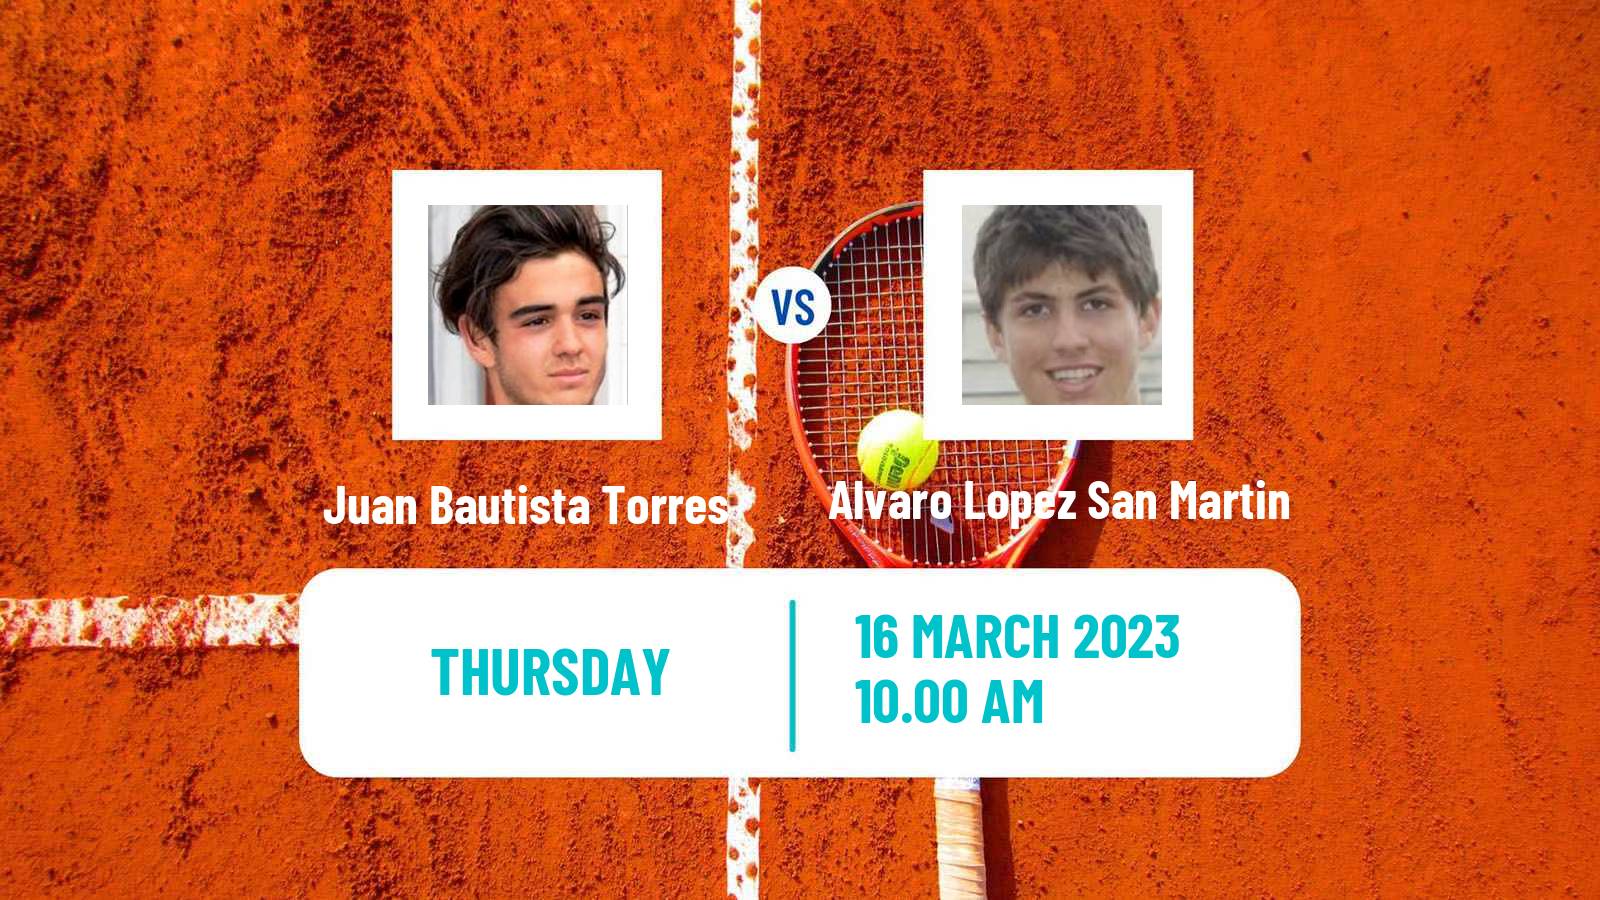 Tennis ATP Challenger Juan Bautista Torres - Alvaro Lopez San Martin